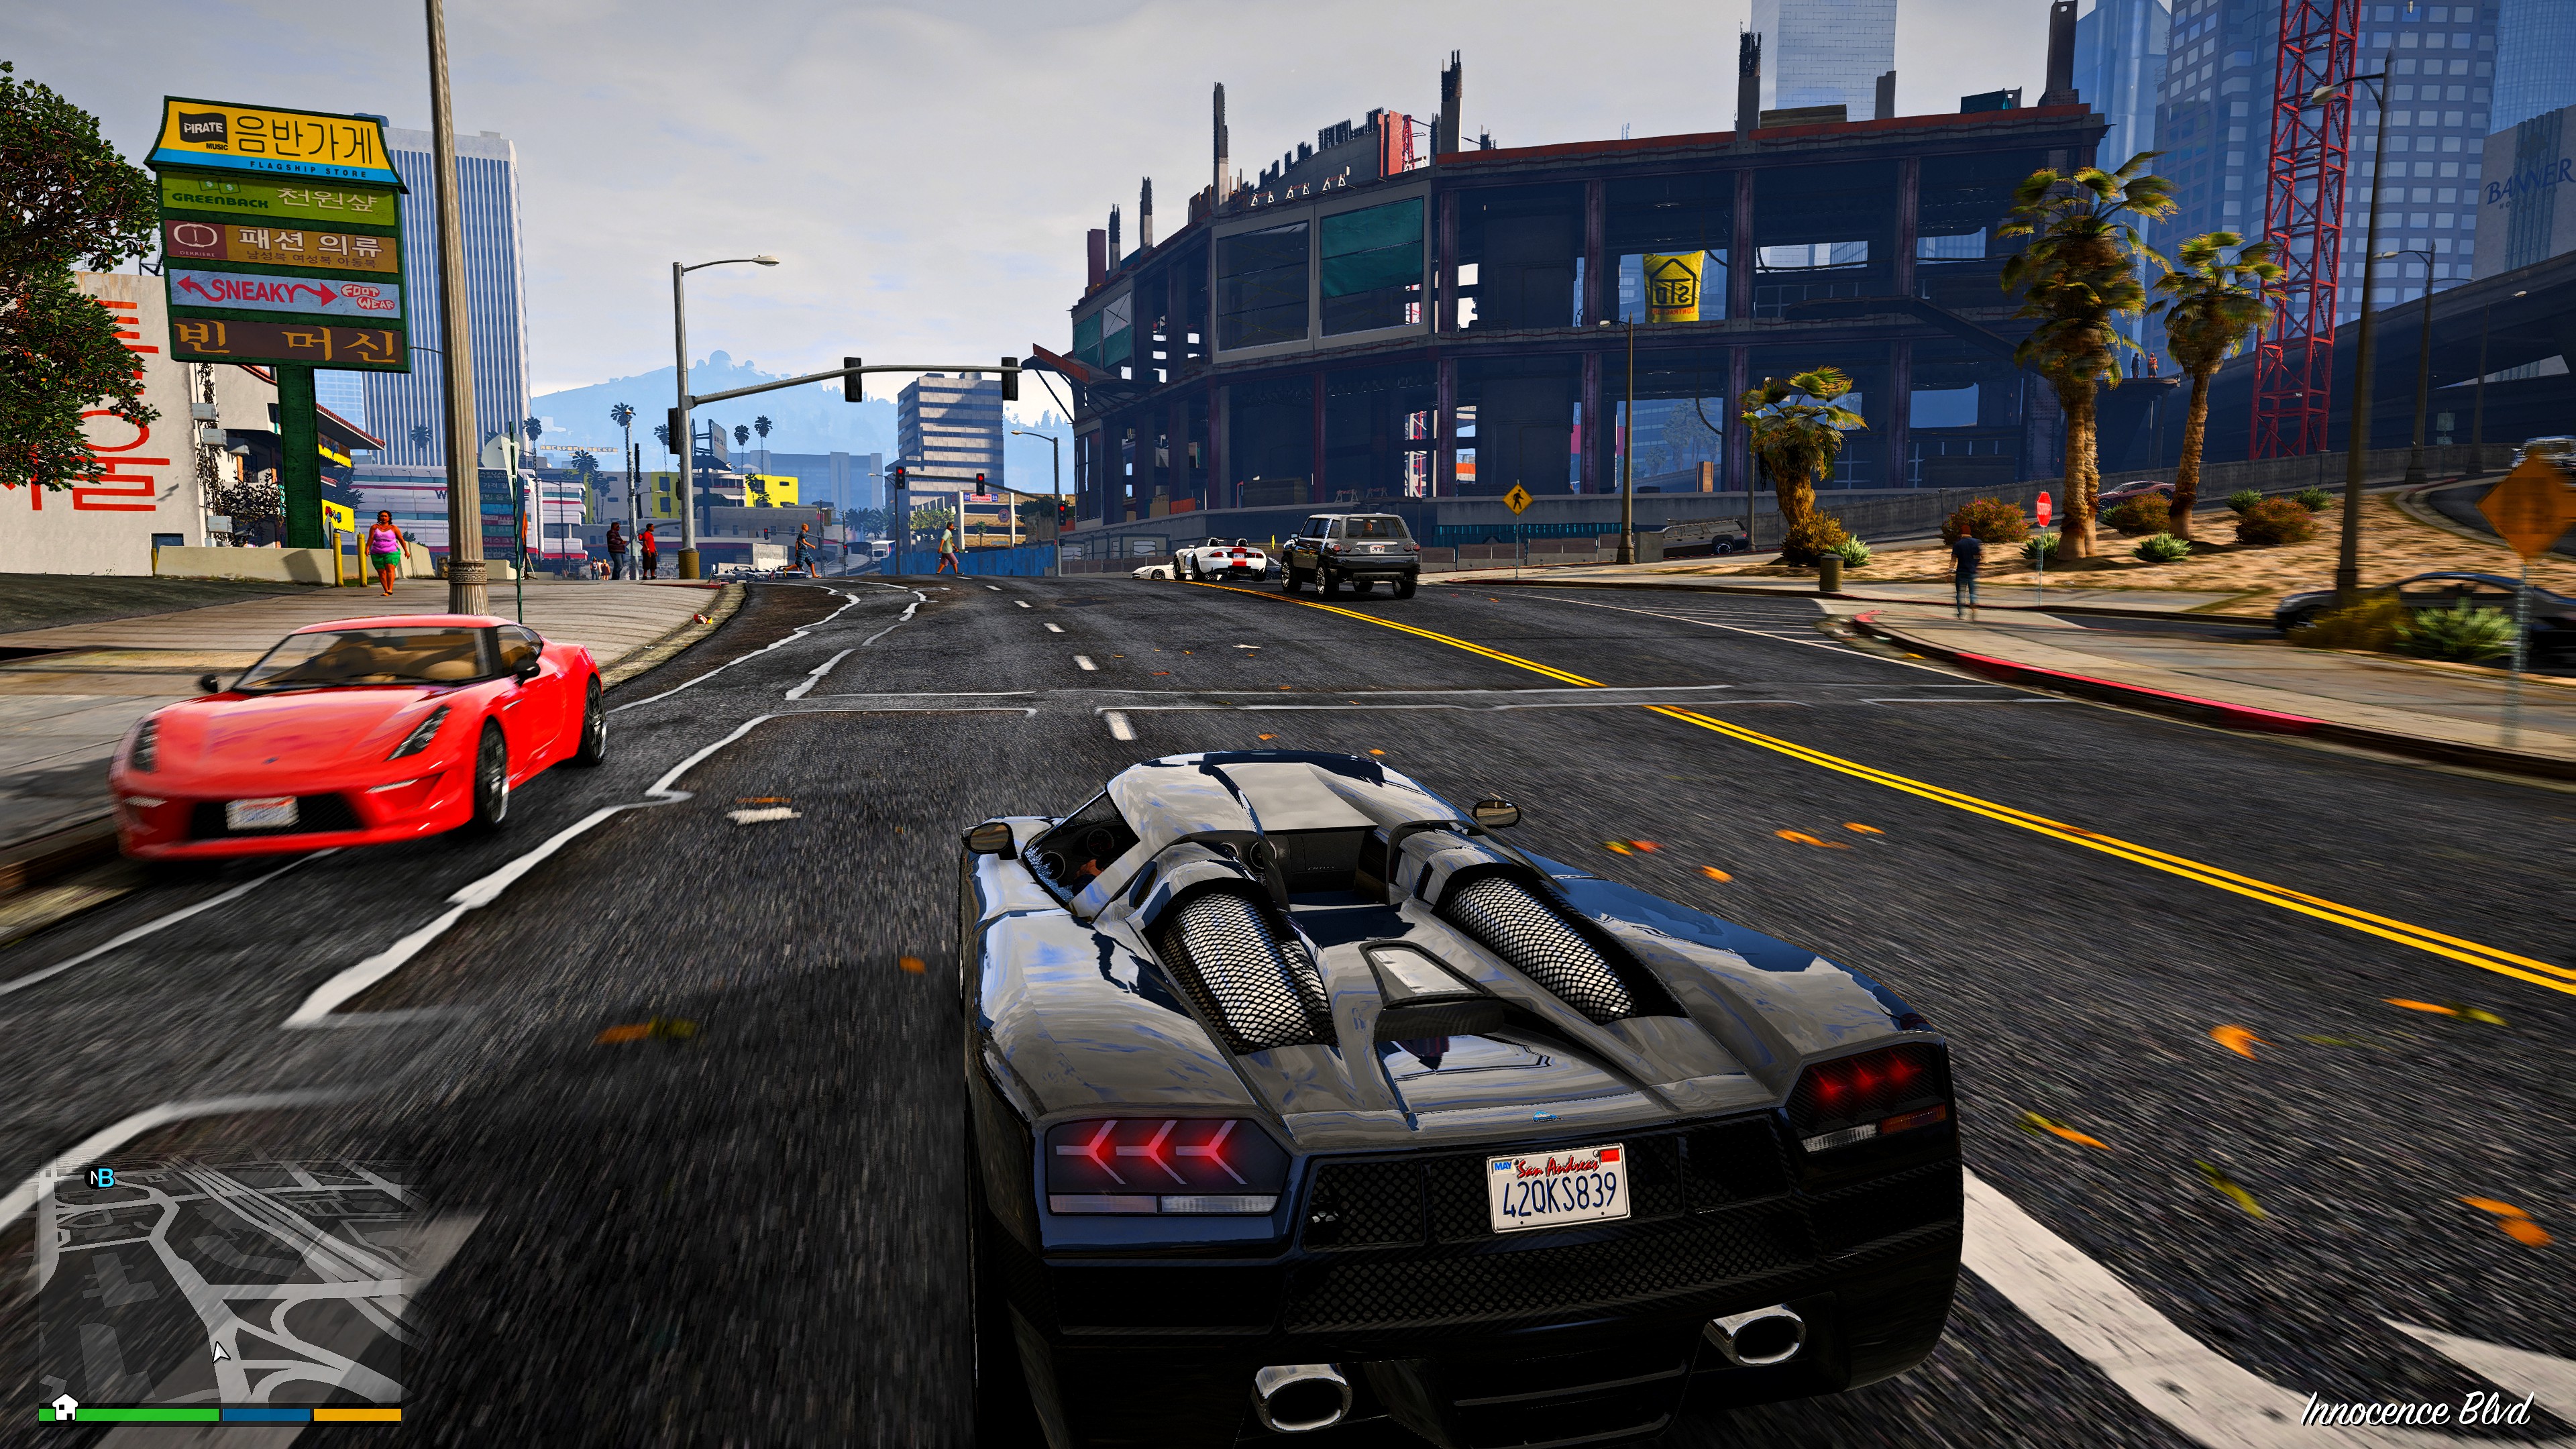 Casino Gta 6 Date De Sortie GTA 6 : Date de sortie du prochain Grand Theft Auto - Breakflip